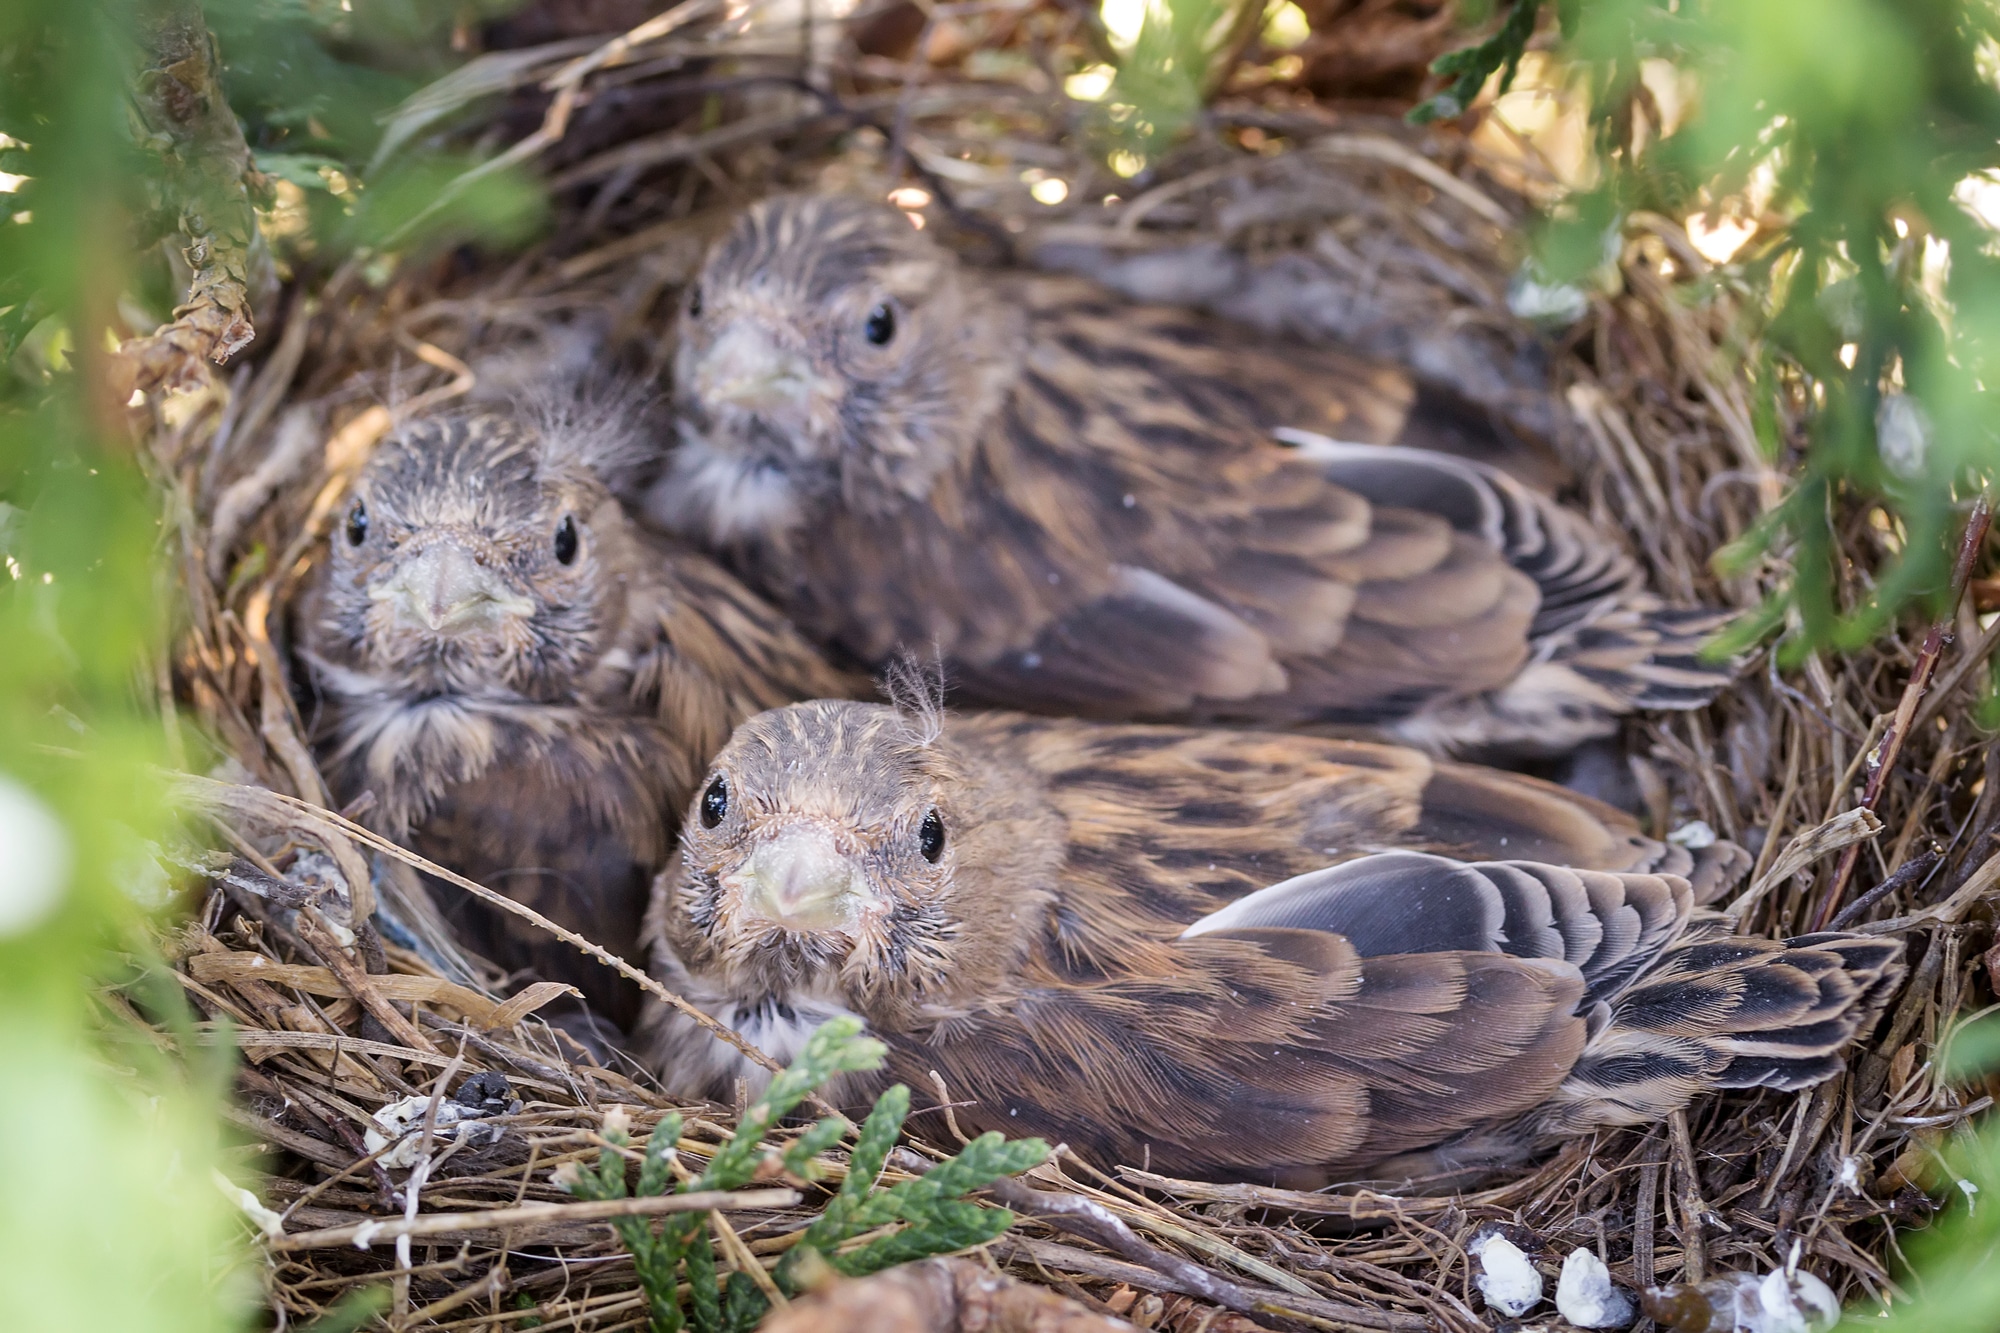 Common Linnet baby birds in a nest